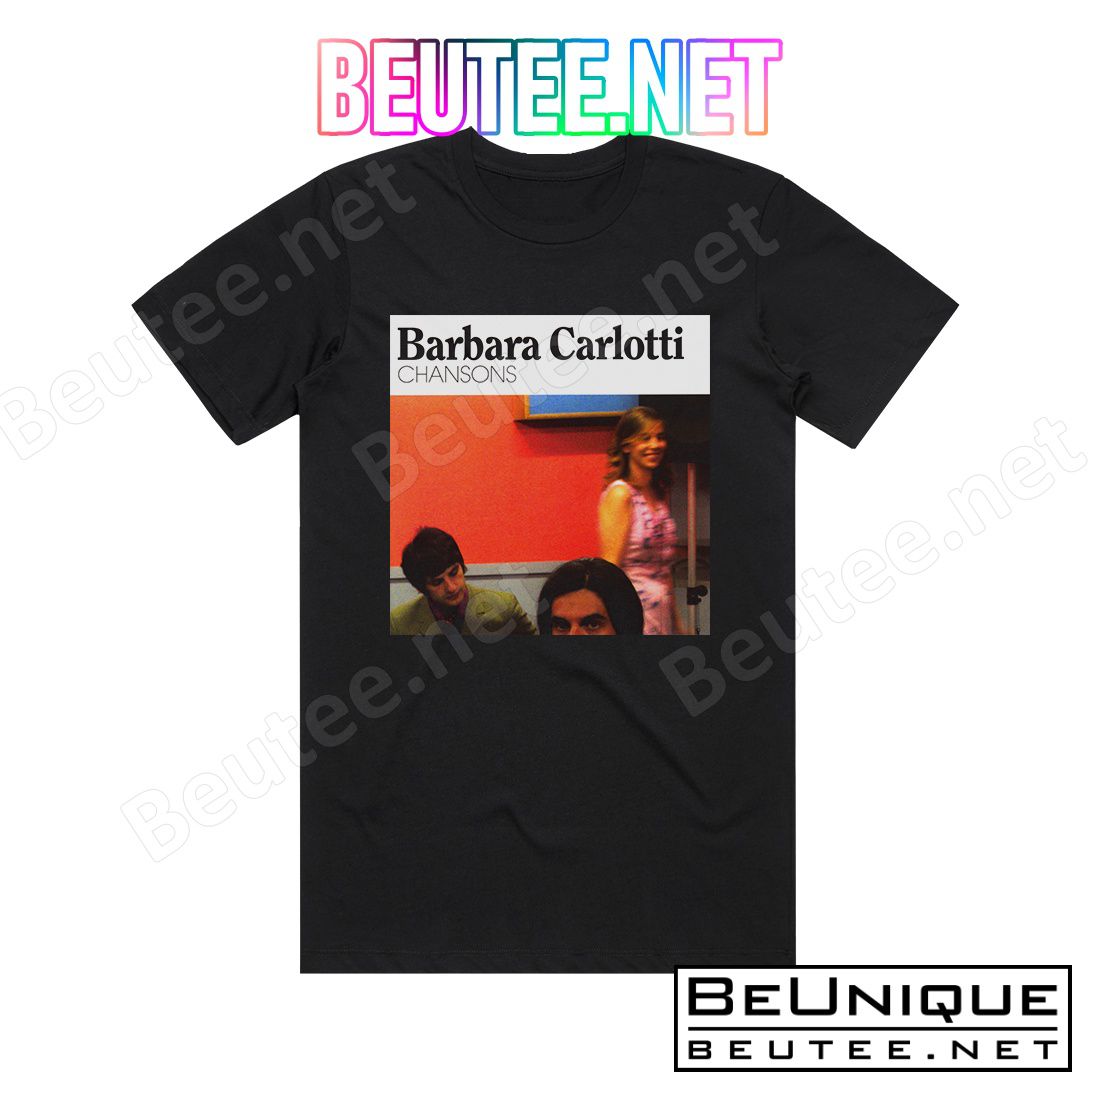 Barbara Carlotti Chansons Album Cover T-Shirt